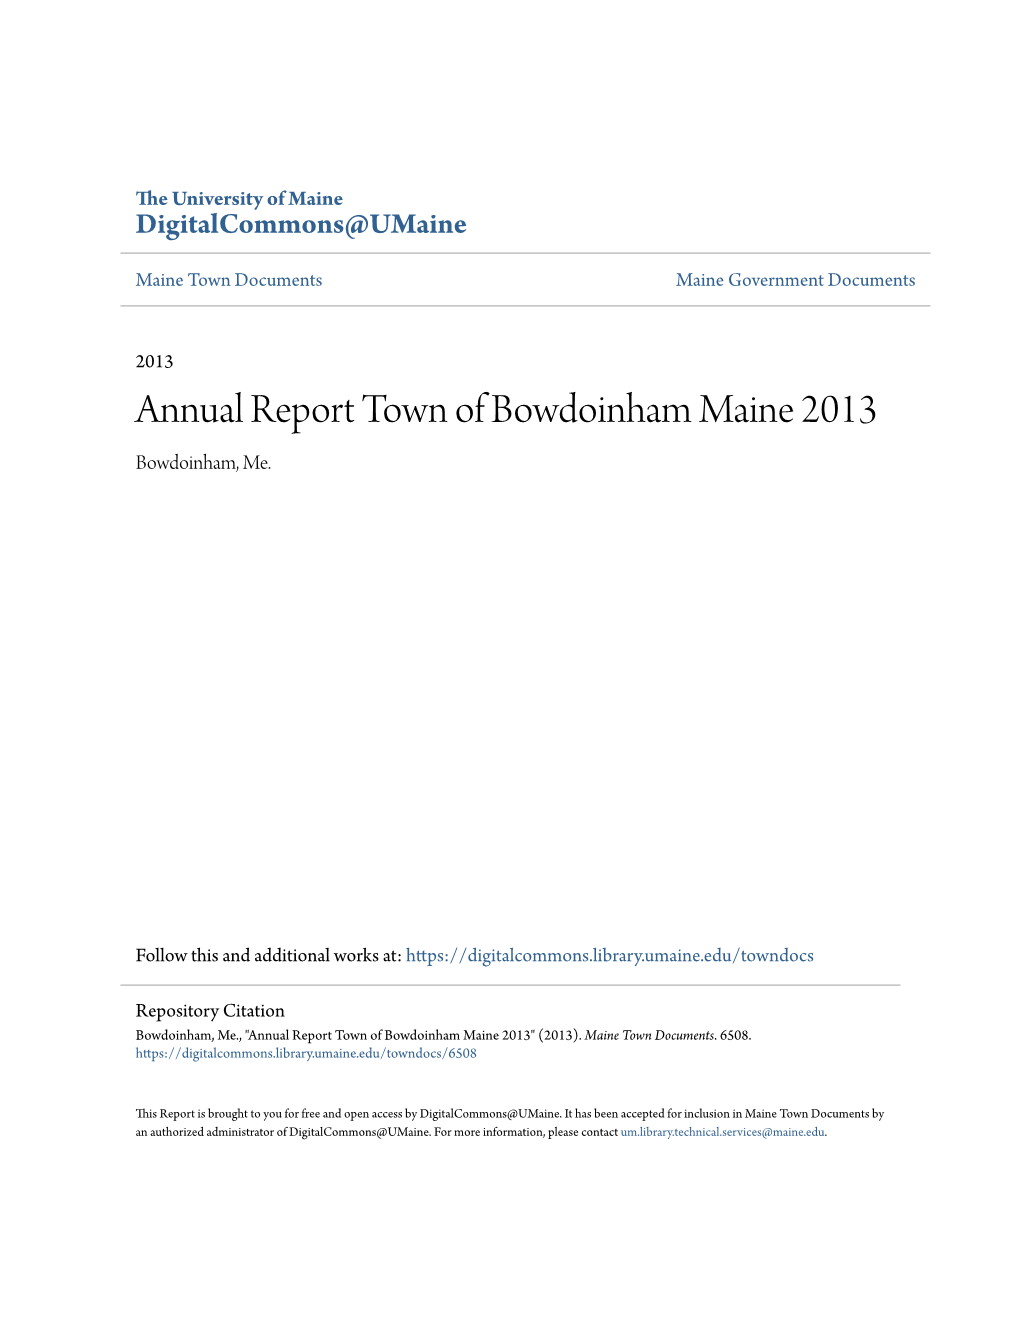 Annual Report Town of Bowdoinham Maine 2013 Bowdoinham, Me